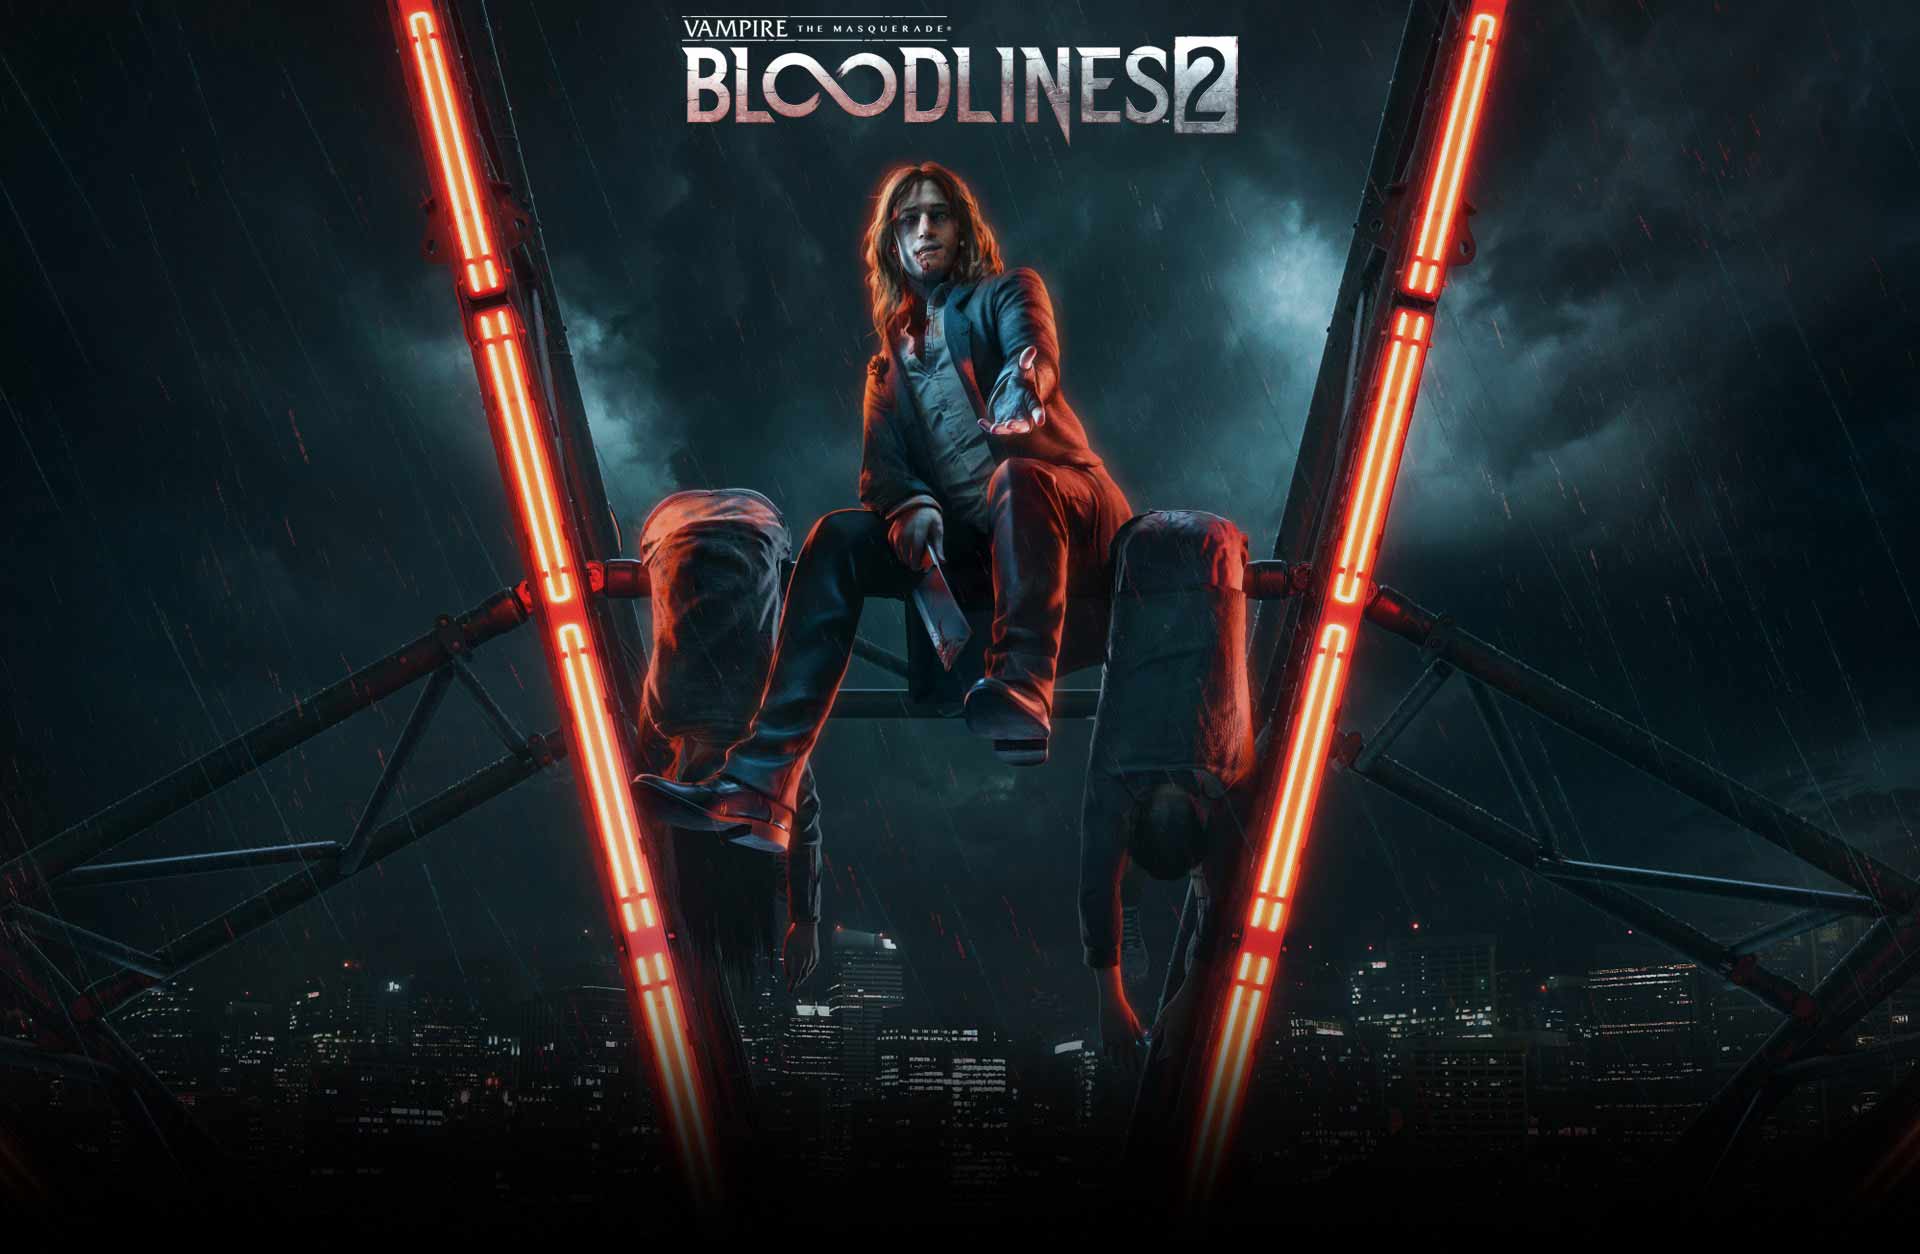 Vampire The Masquerade - Bloodlines 2